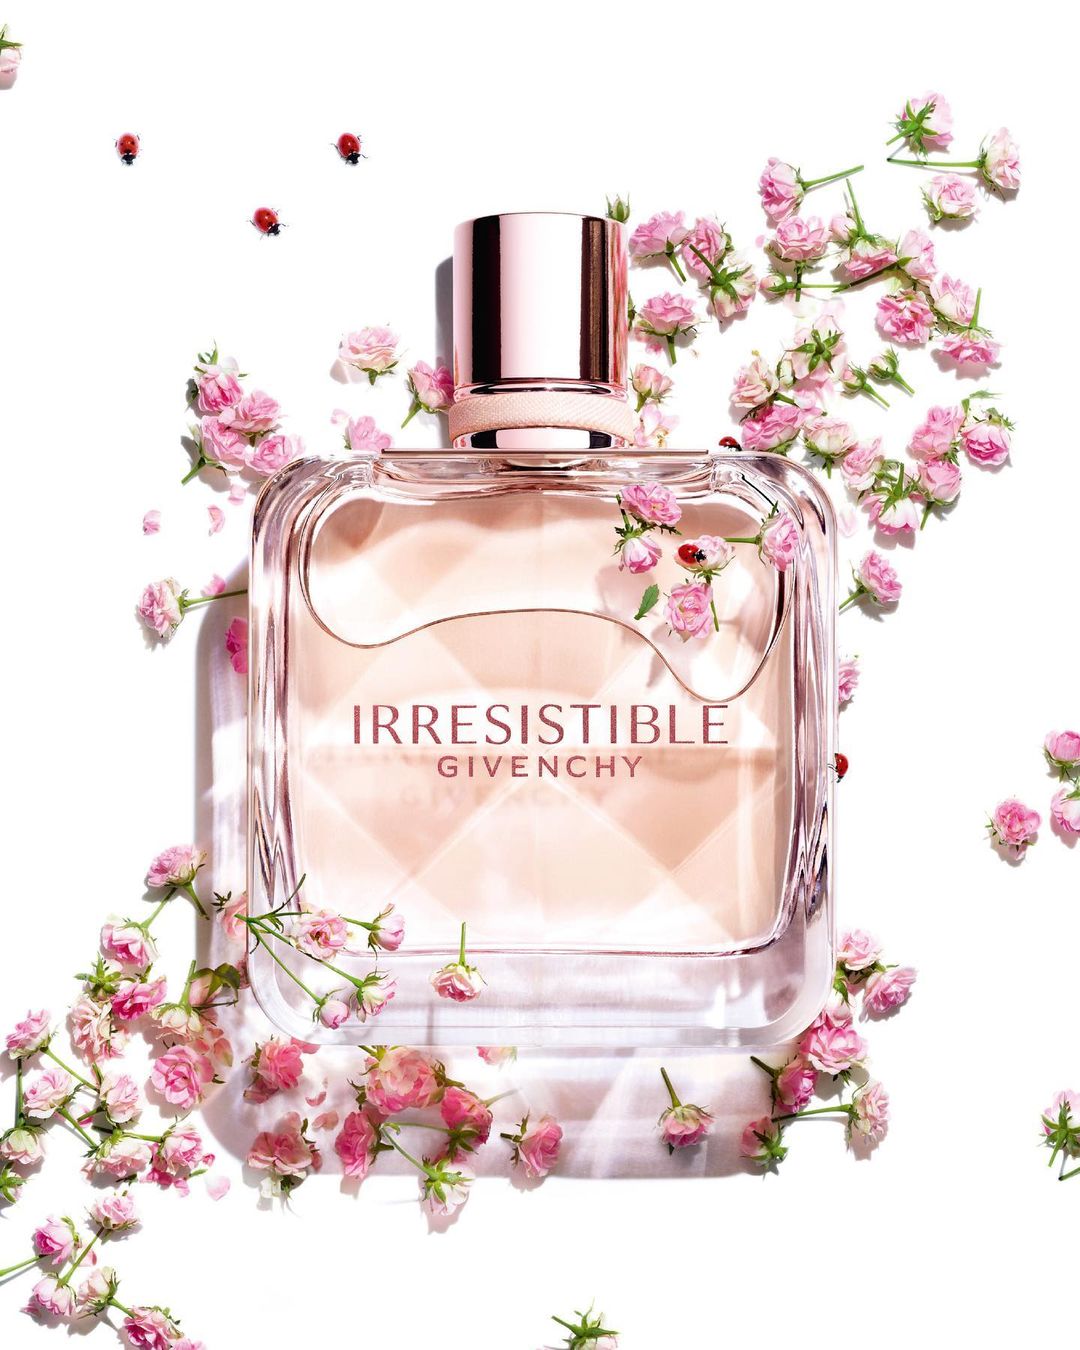 Buy GIVENCHY Very Irresistible Eau de Parfum - 50 ml Online In India